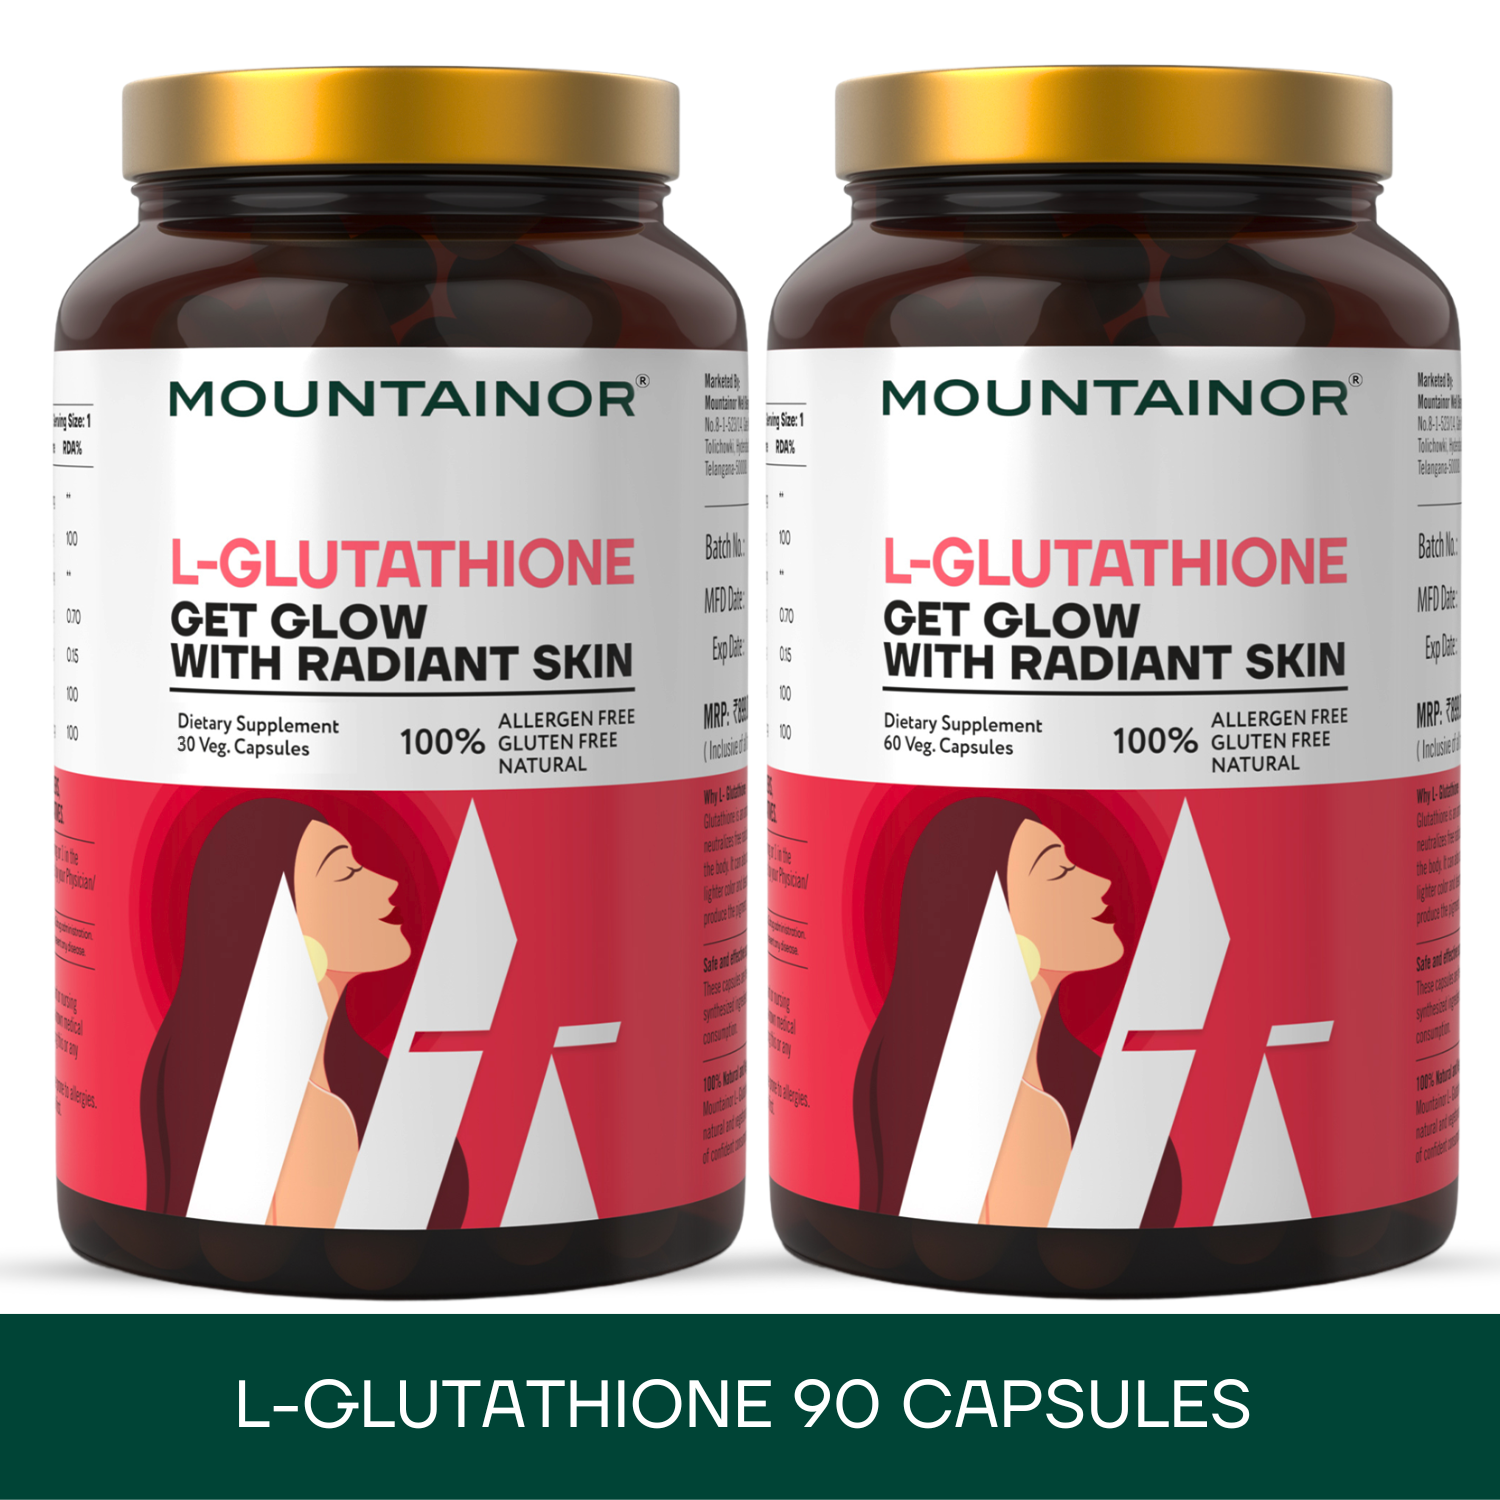 L-Glutathione Capsules✨ for Glowing Skin - Enhanced with Vitamins C, E, Biotin & Antioxidants